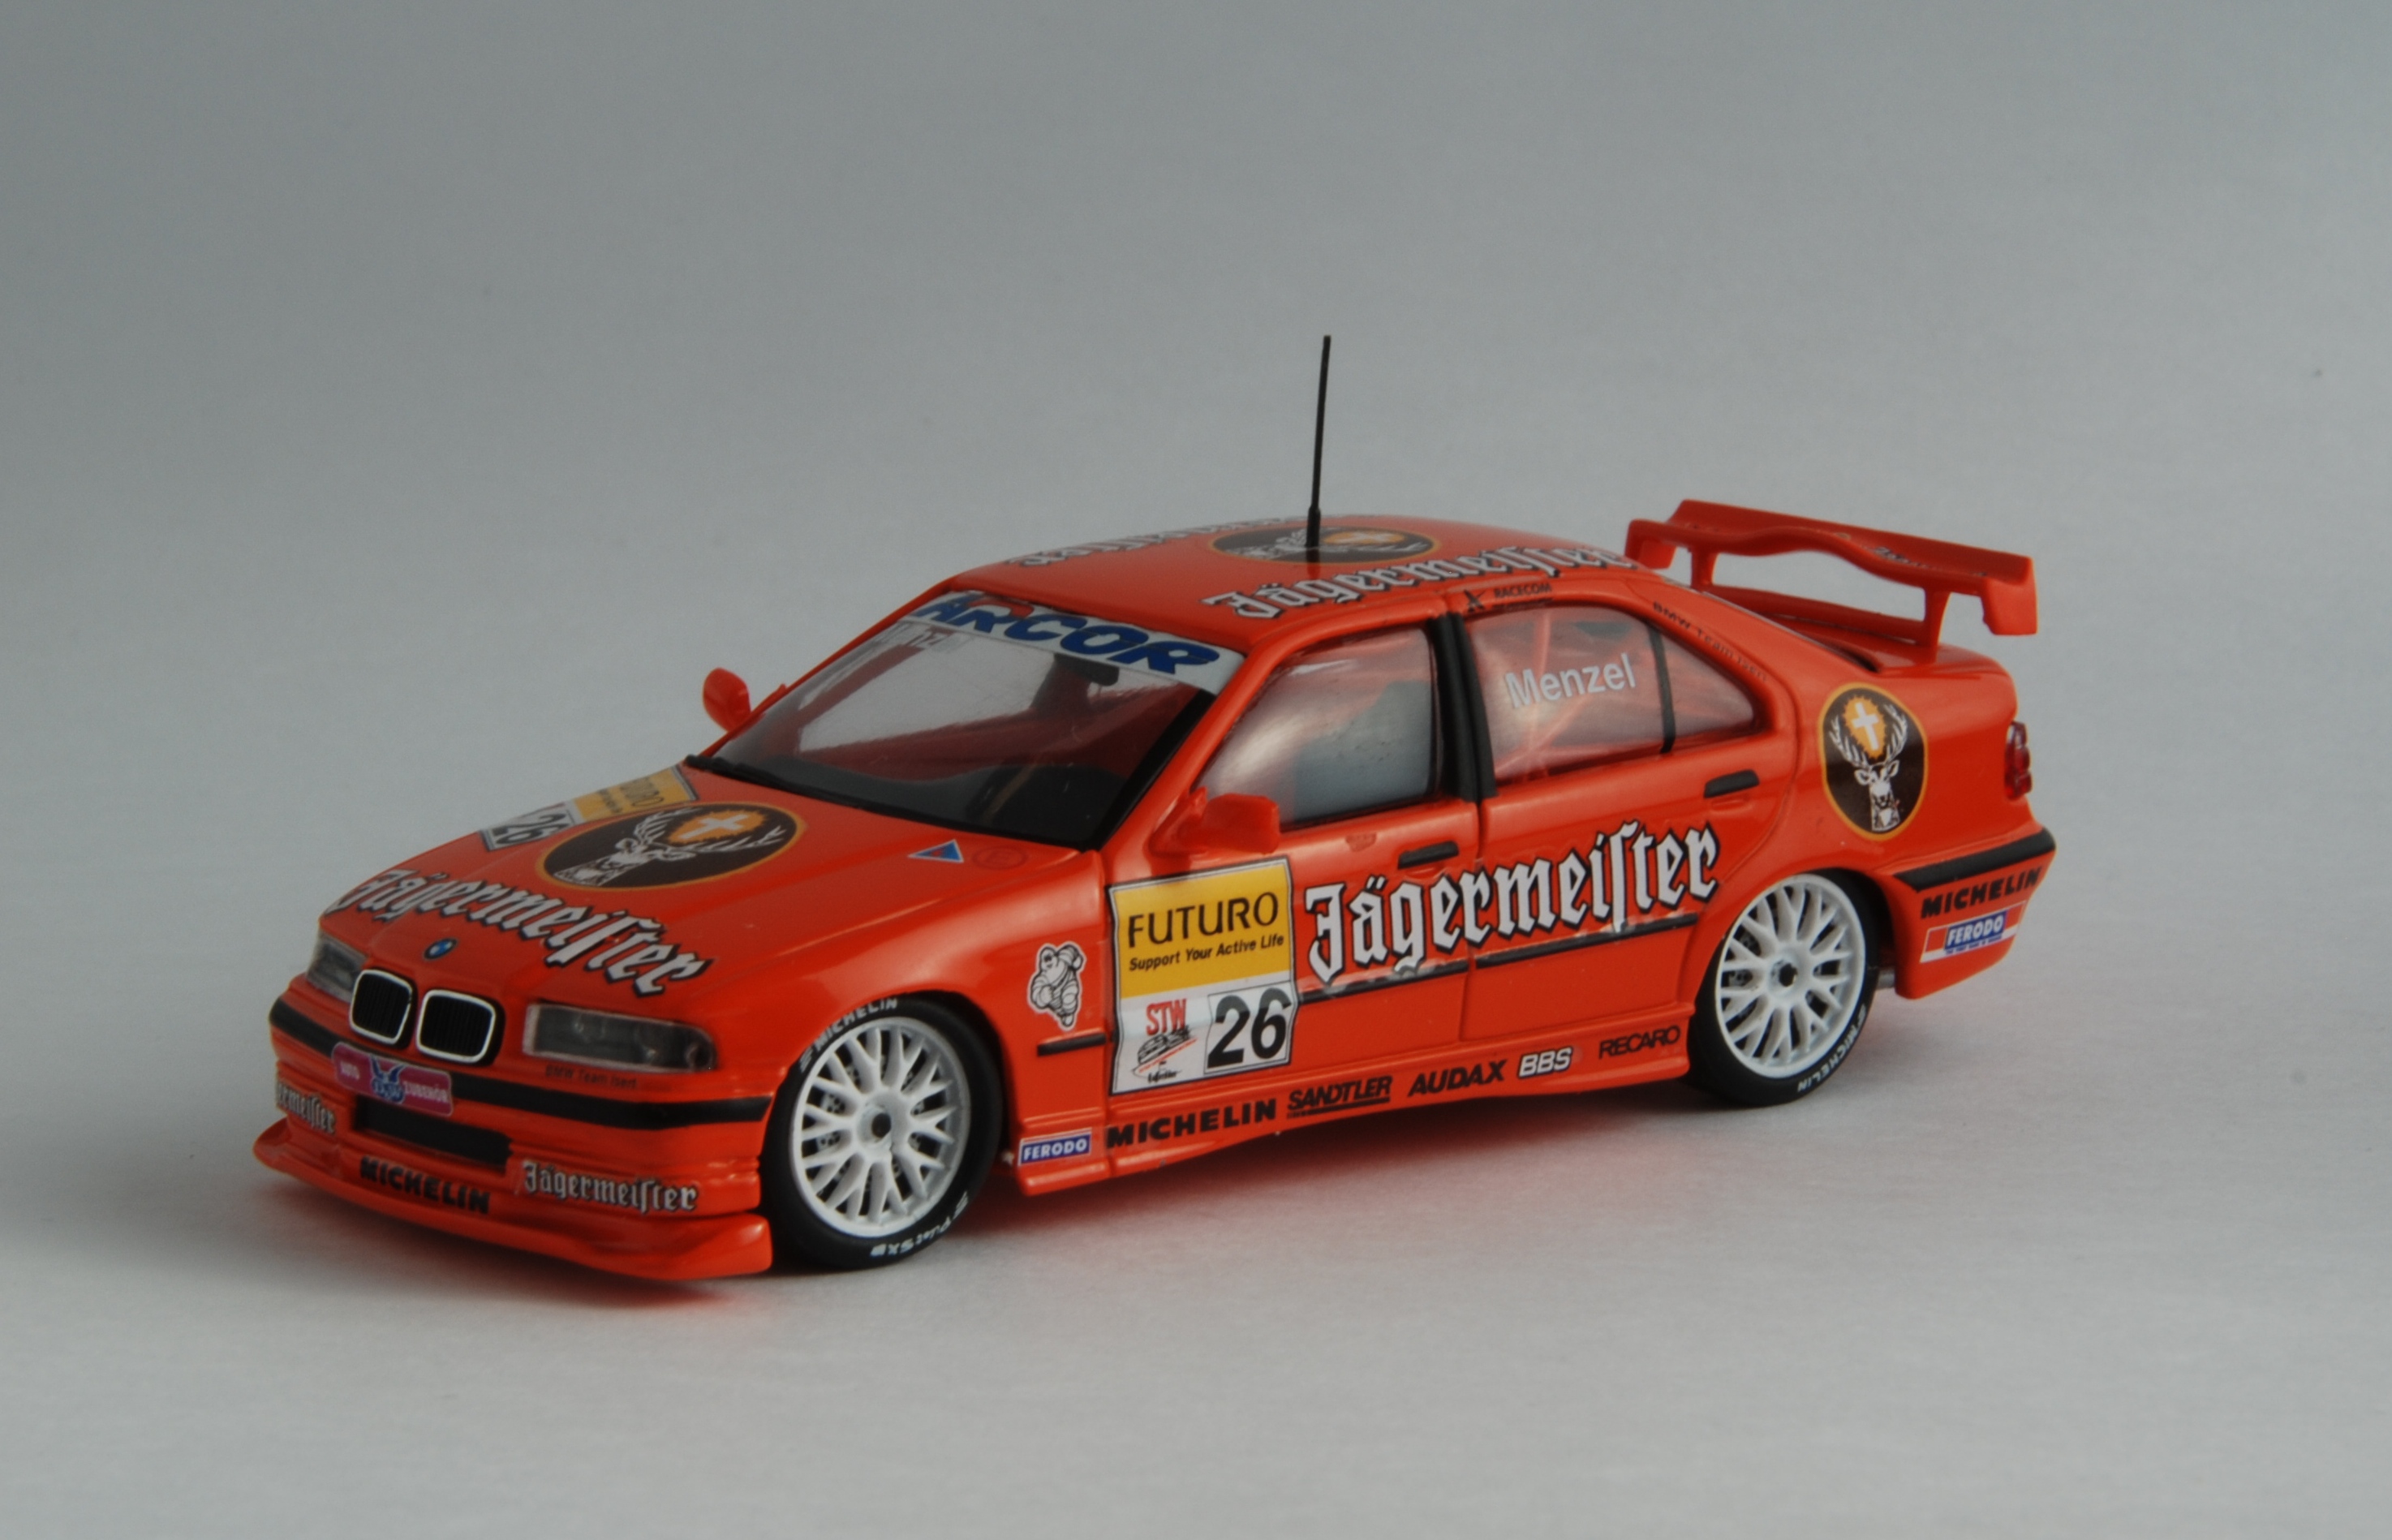 BMW 320i (E36) STW 1998, Team Isert, #26 Ch.Menzel (minichamps)